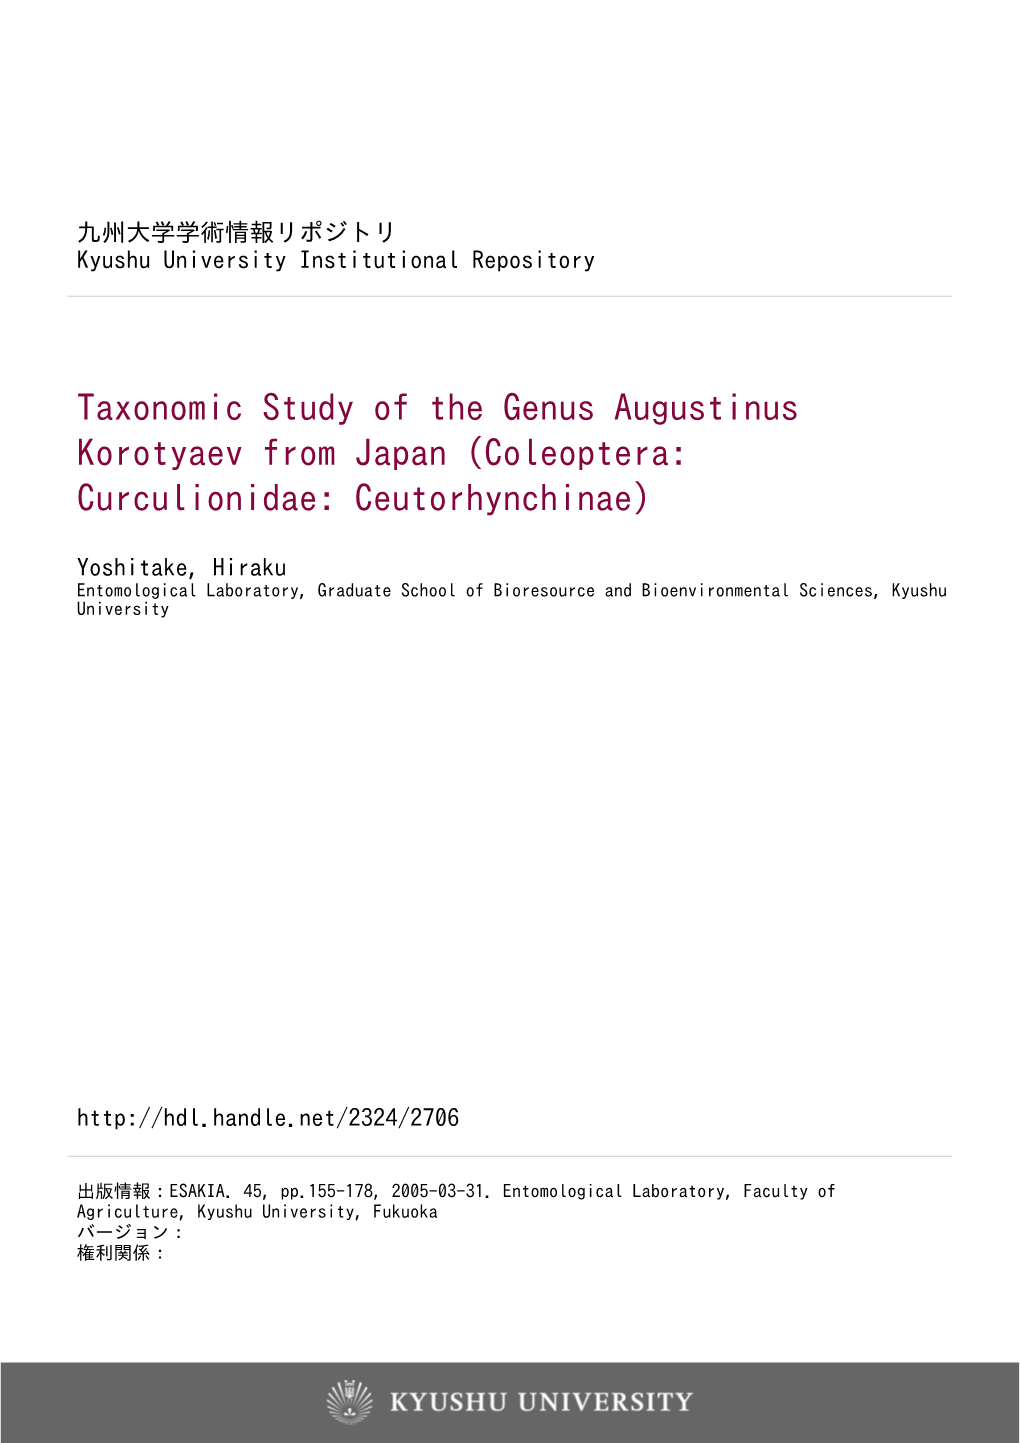 Taxonomic Study of the Genus Augustinus Korotyaev from Japan (Coleoptera: Curculionidae: Ceutorhynchinae)